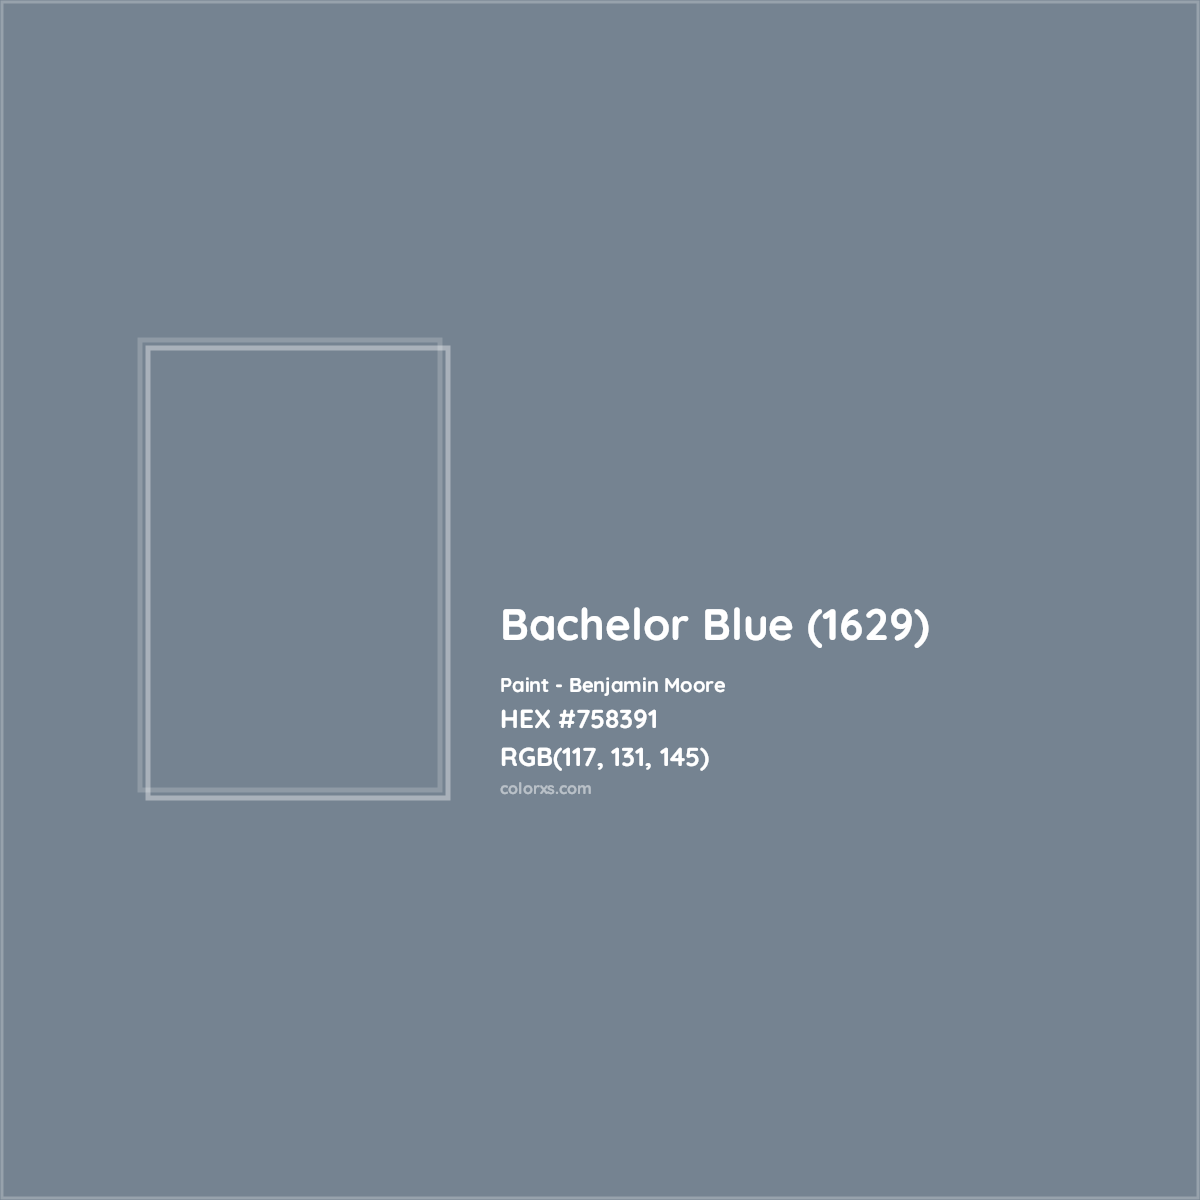 HEX #758391 Bachelor Blue (1629) Paint Benjamin Moore - Color Code